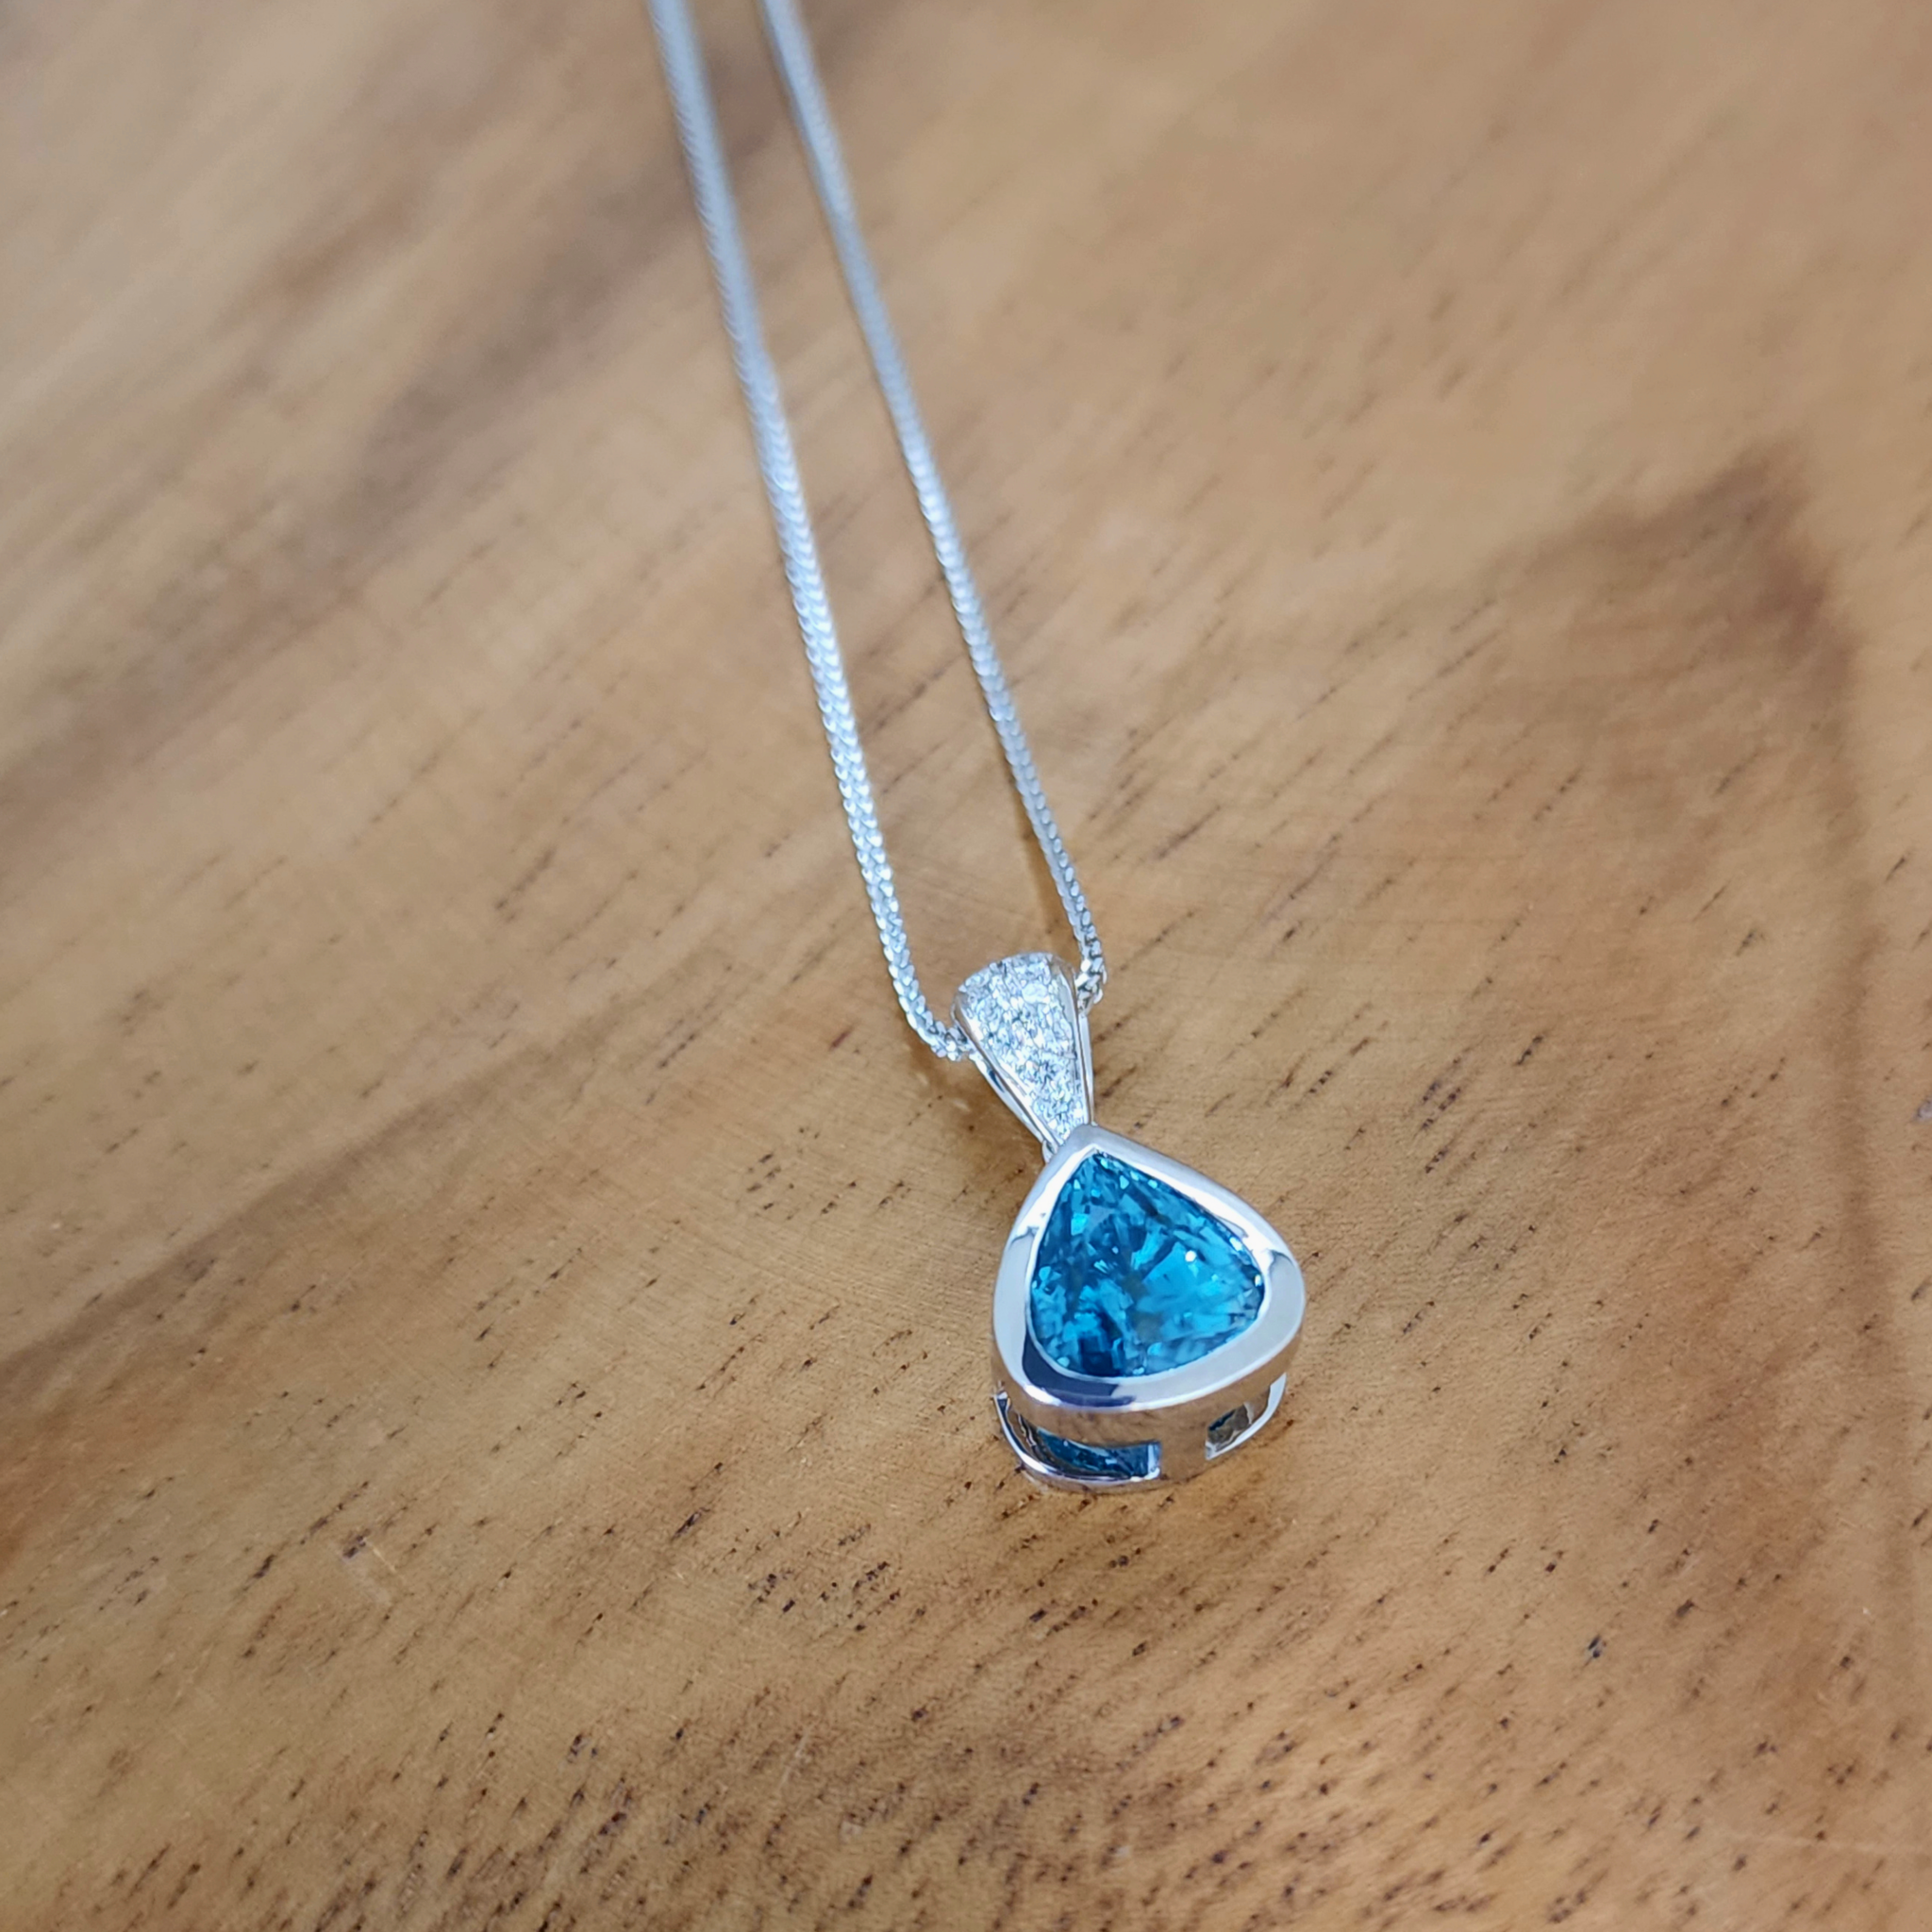 Gemstone Necklace - Blue Lace Agate